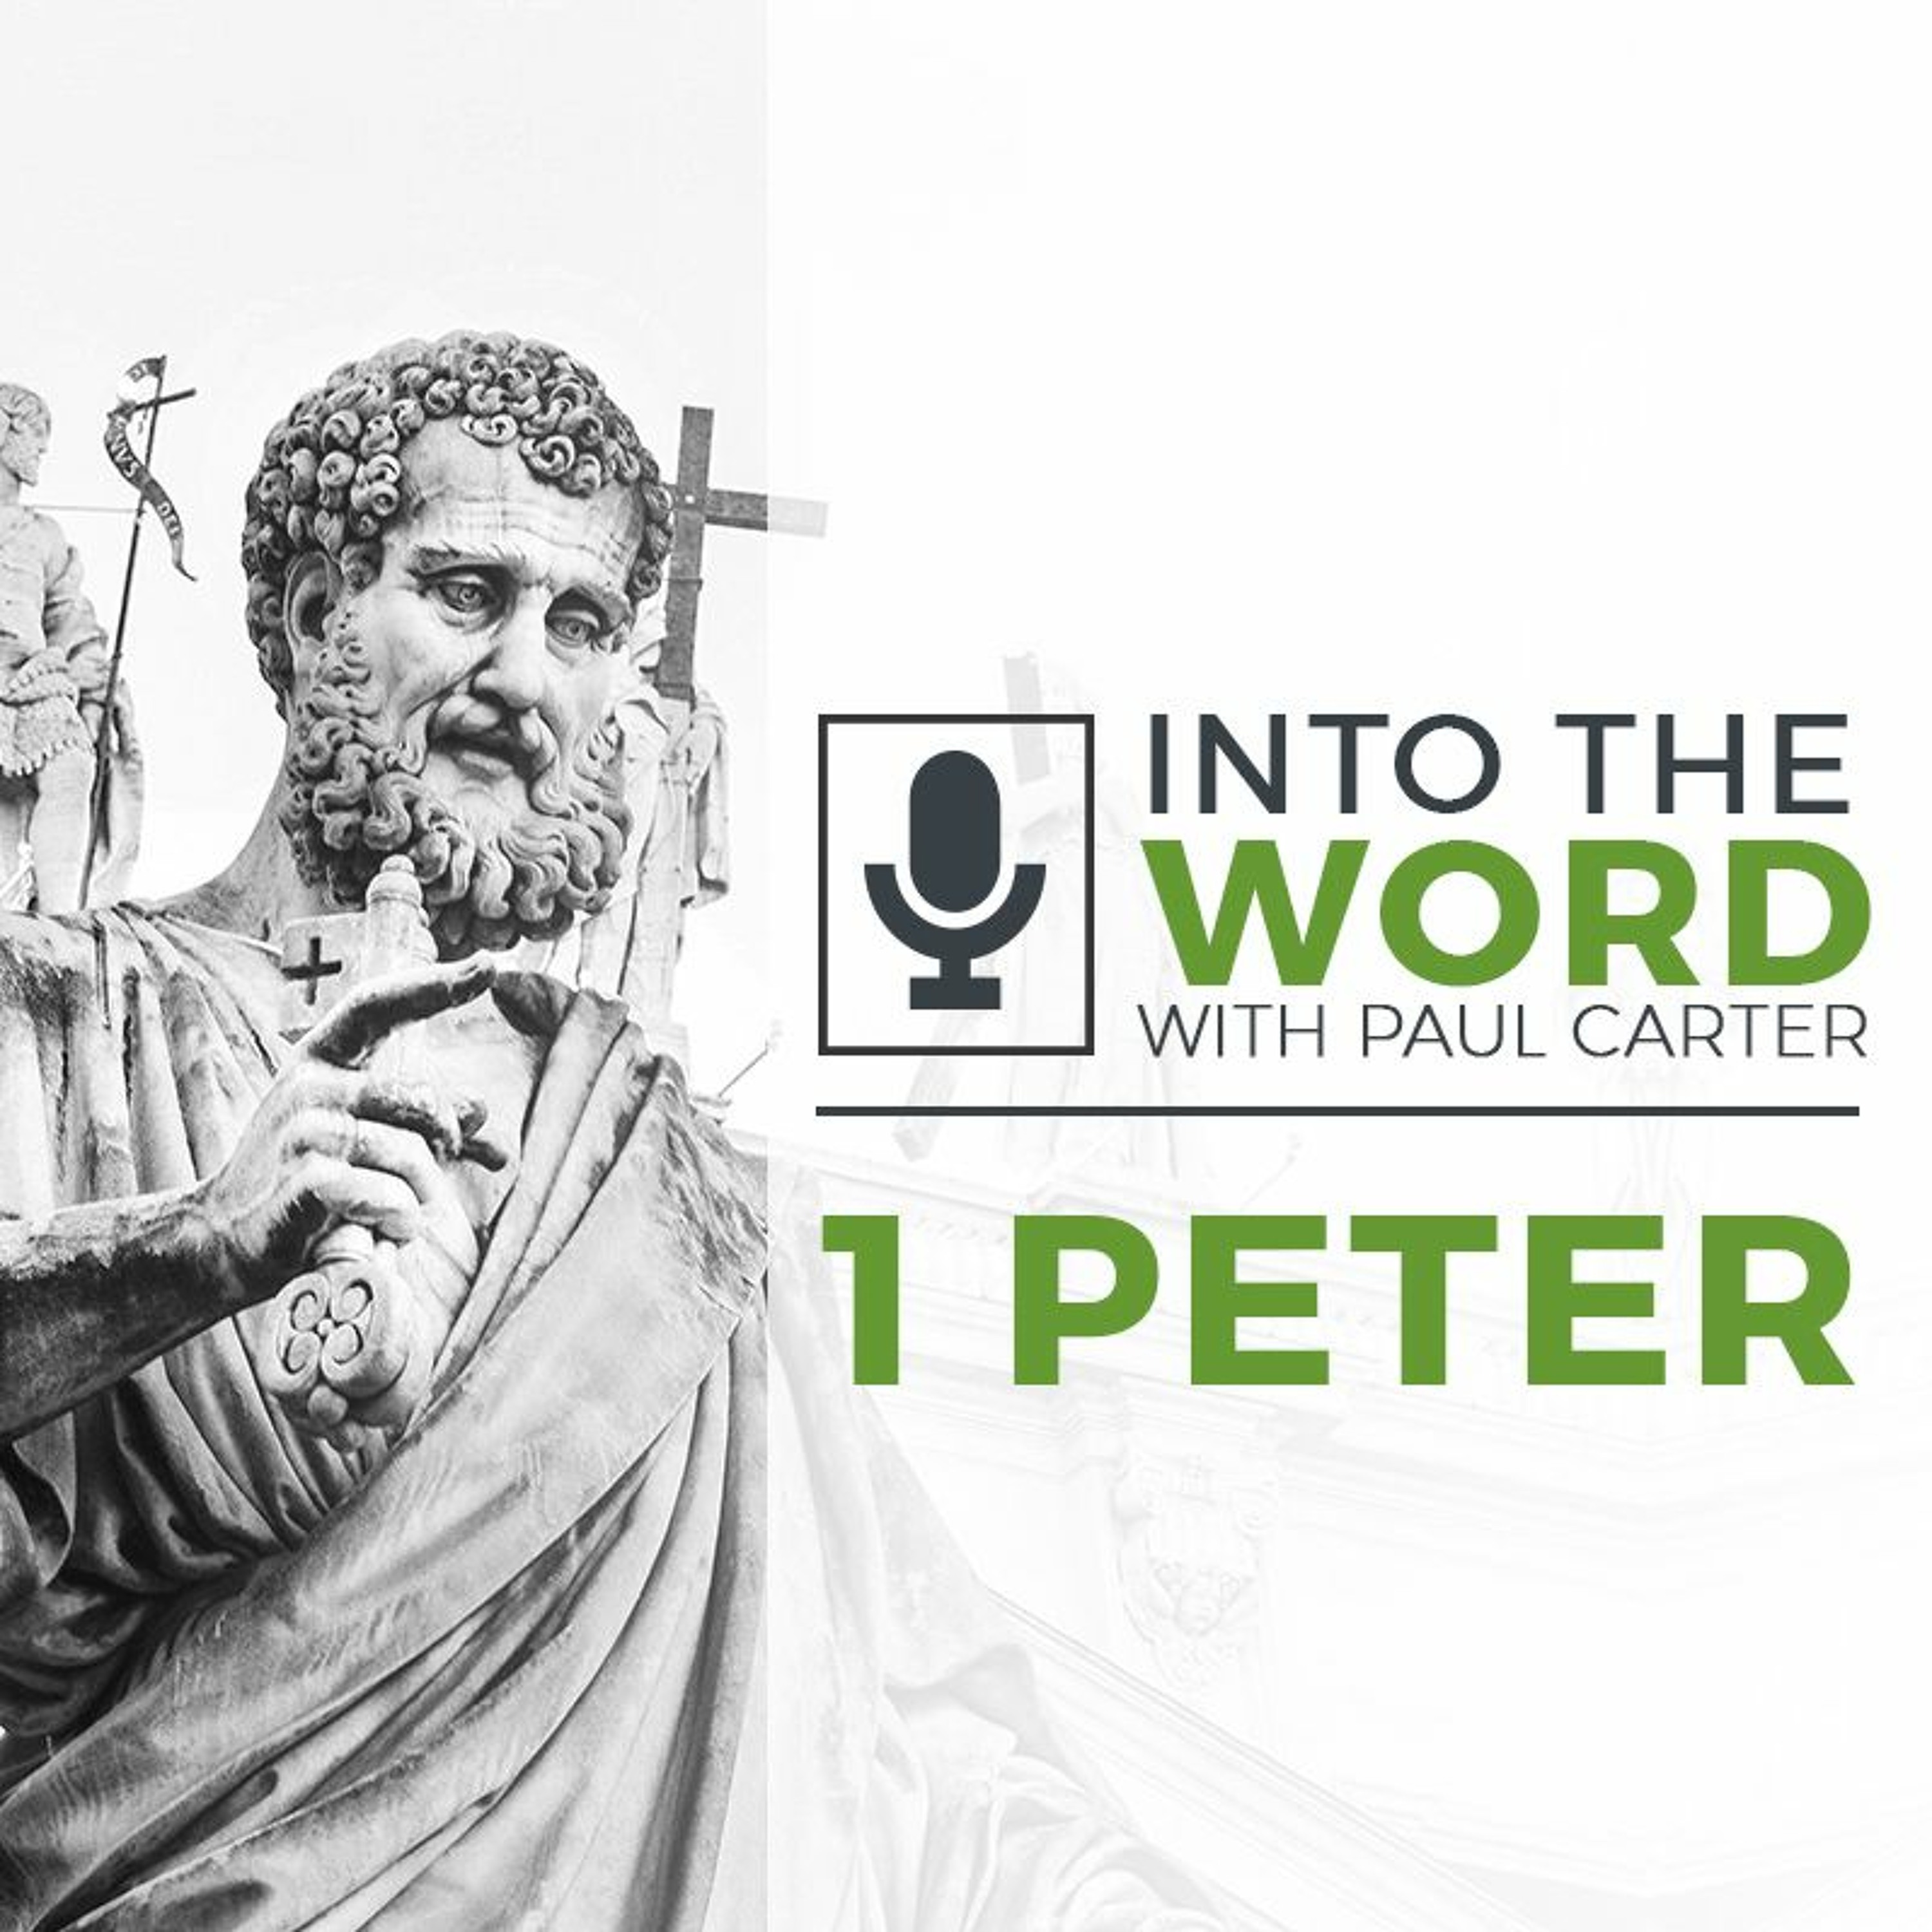 1 Peter 1